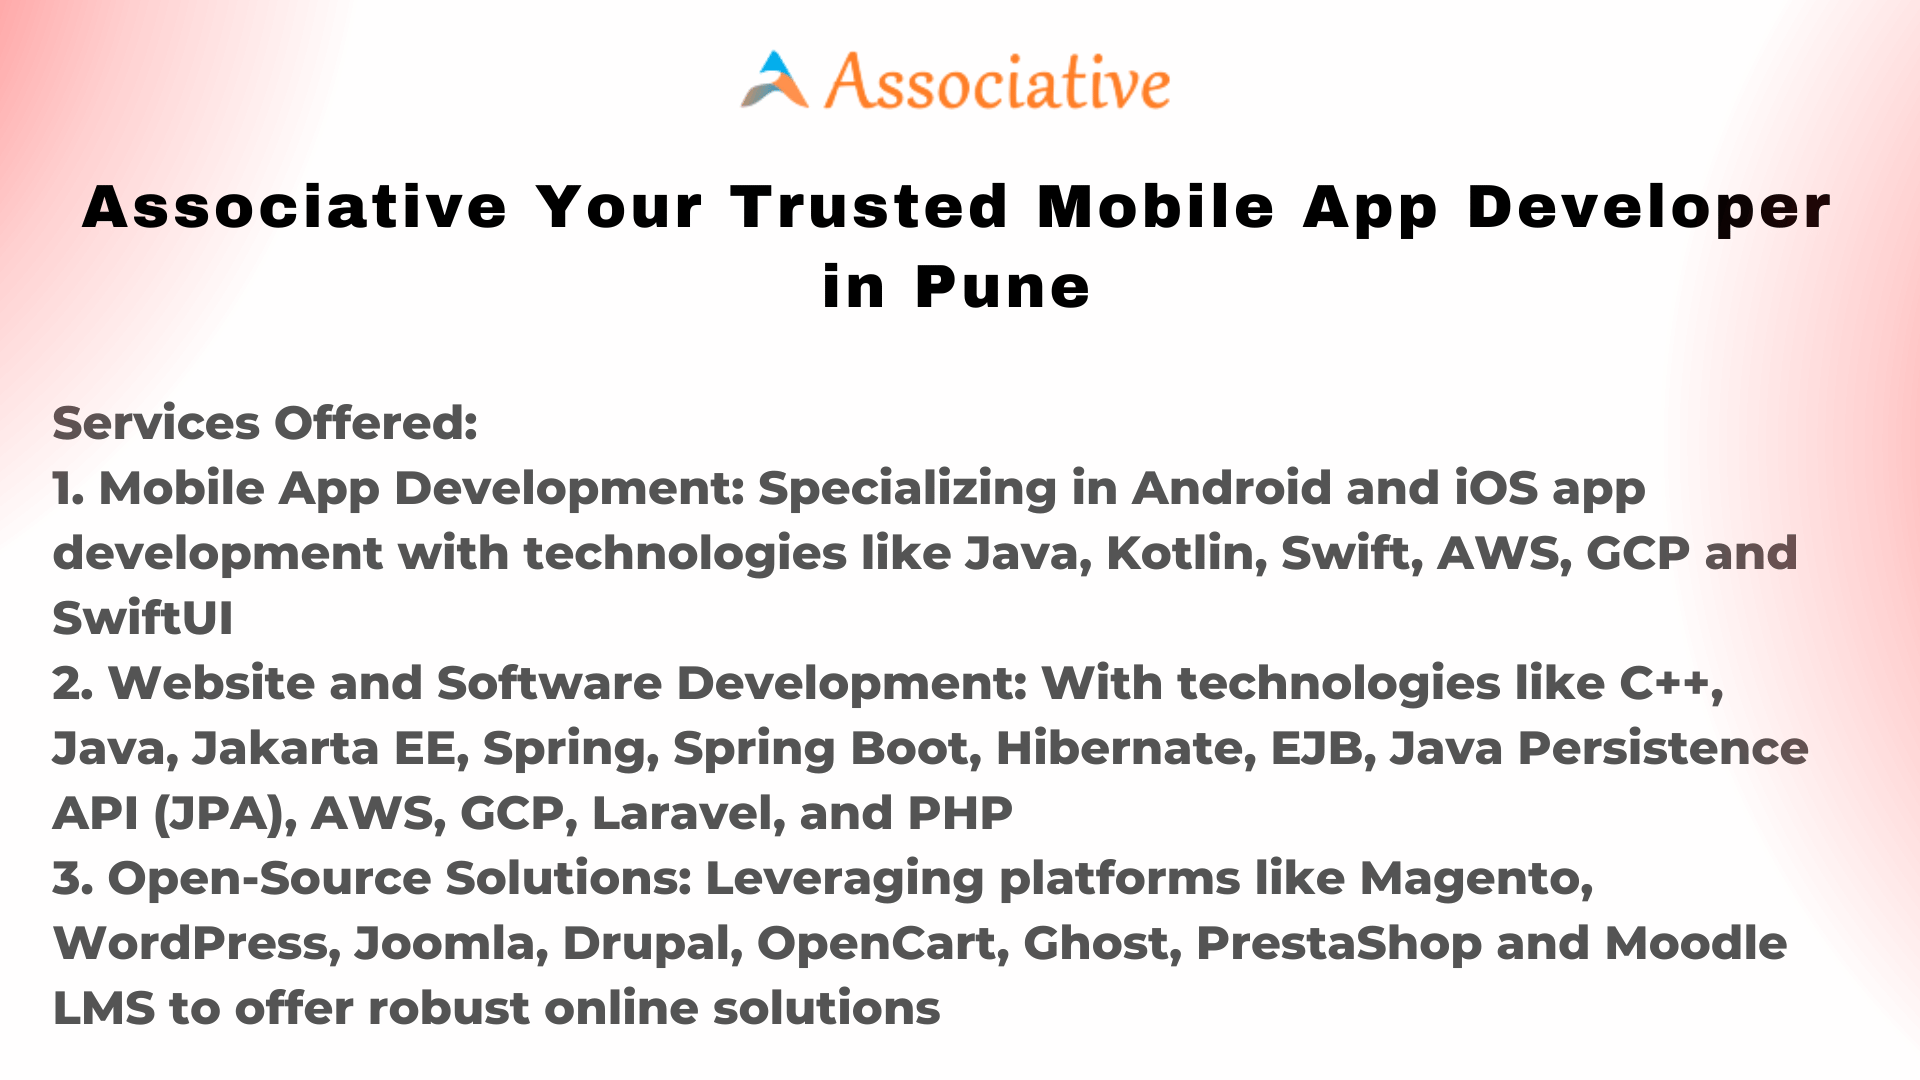 Associative Your Trusted Mobile App Developer in Pune